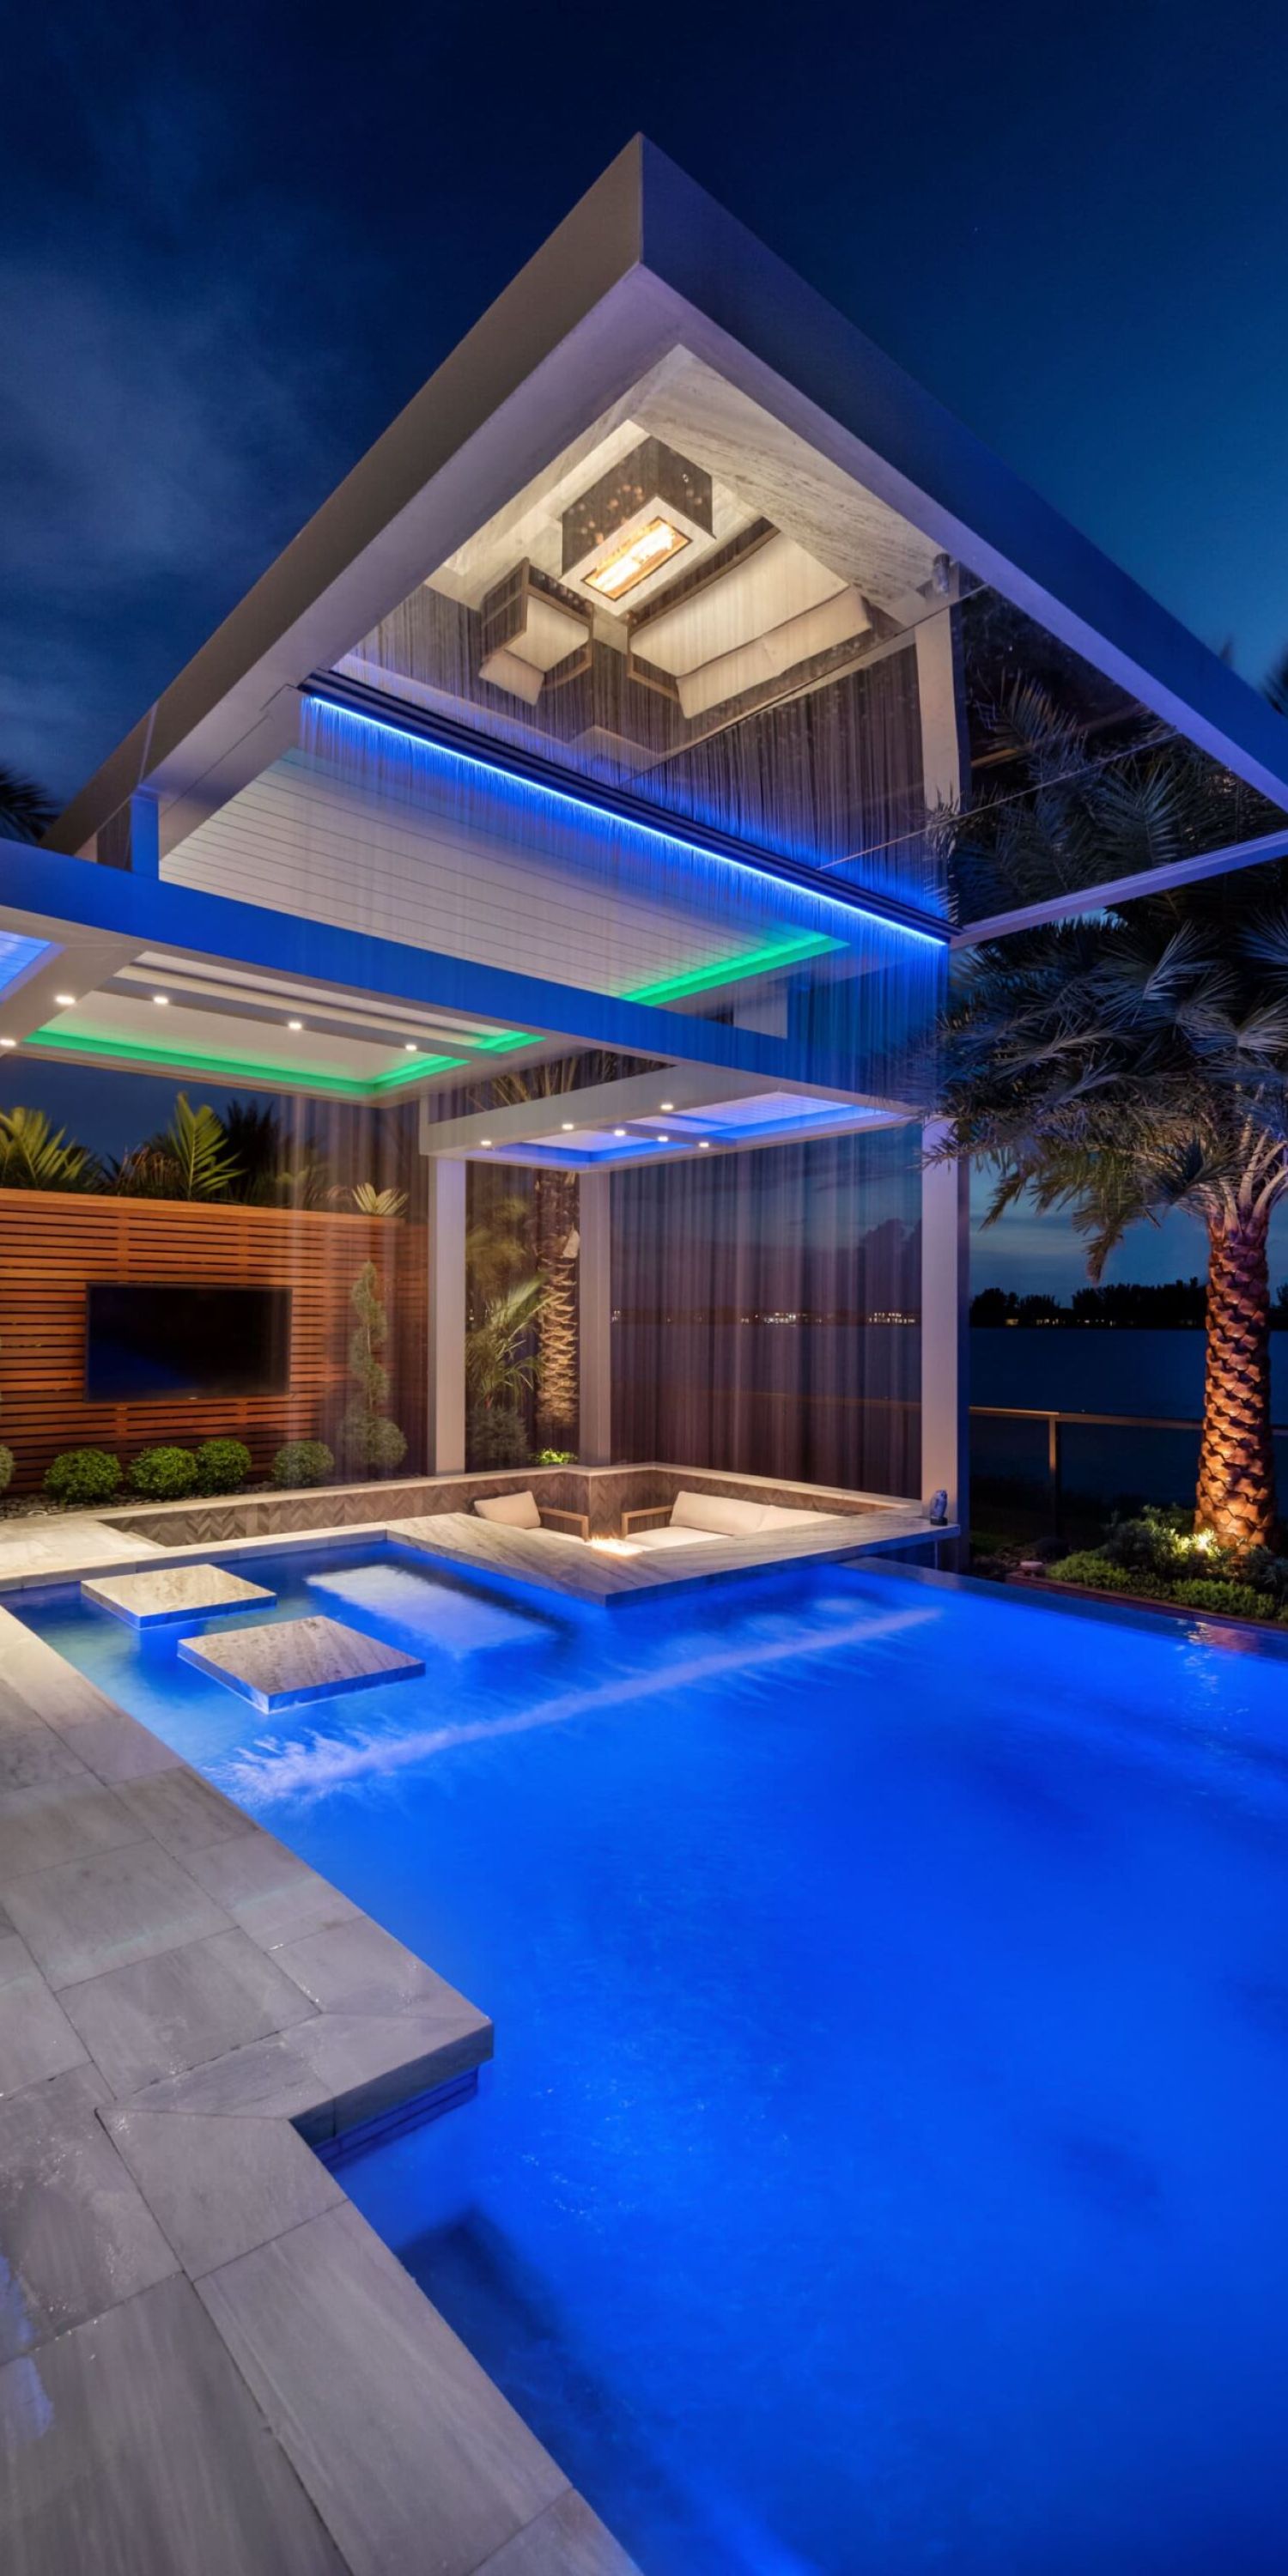 Ikes-Carter-Pools-Fort-Lauderdale-pool-builder-mouttet-00014